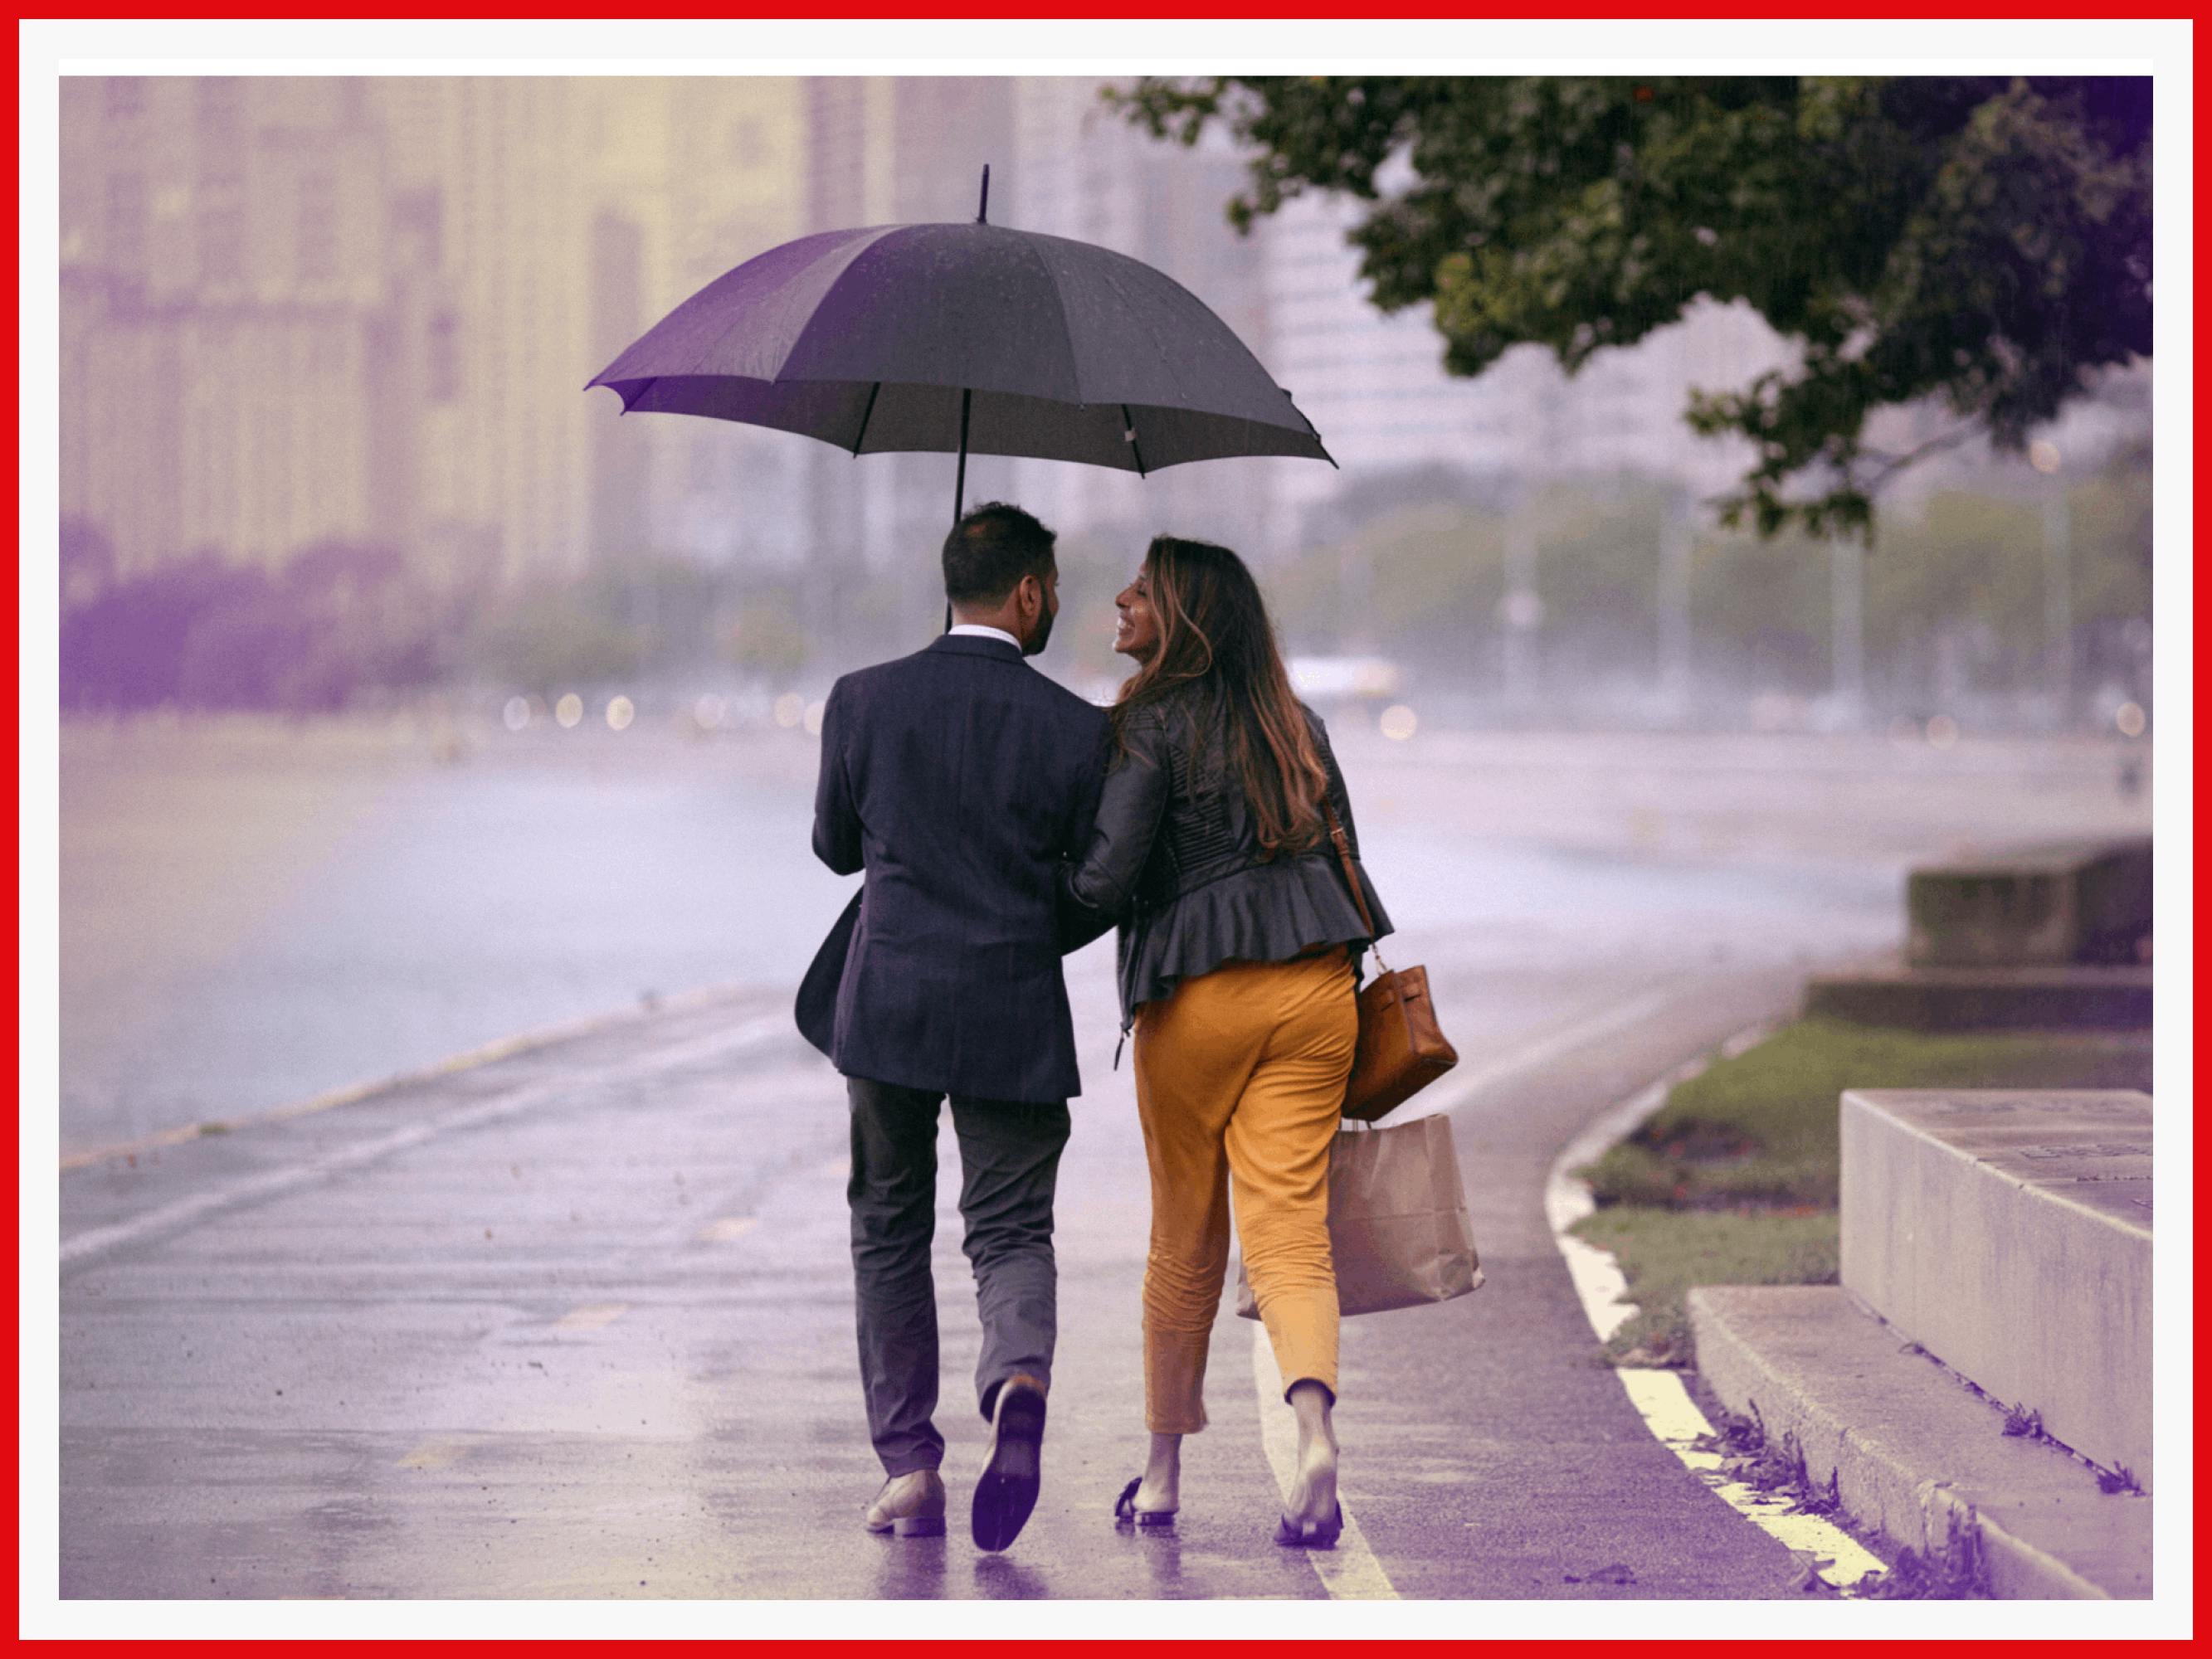 The couple walk down a rainy street.